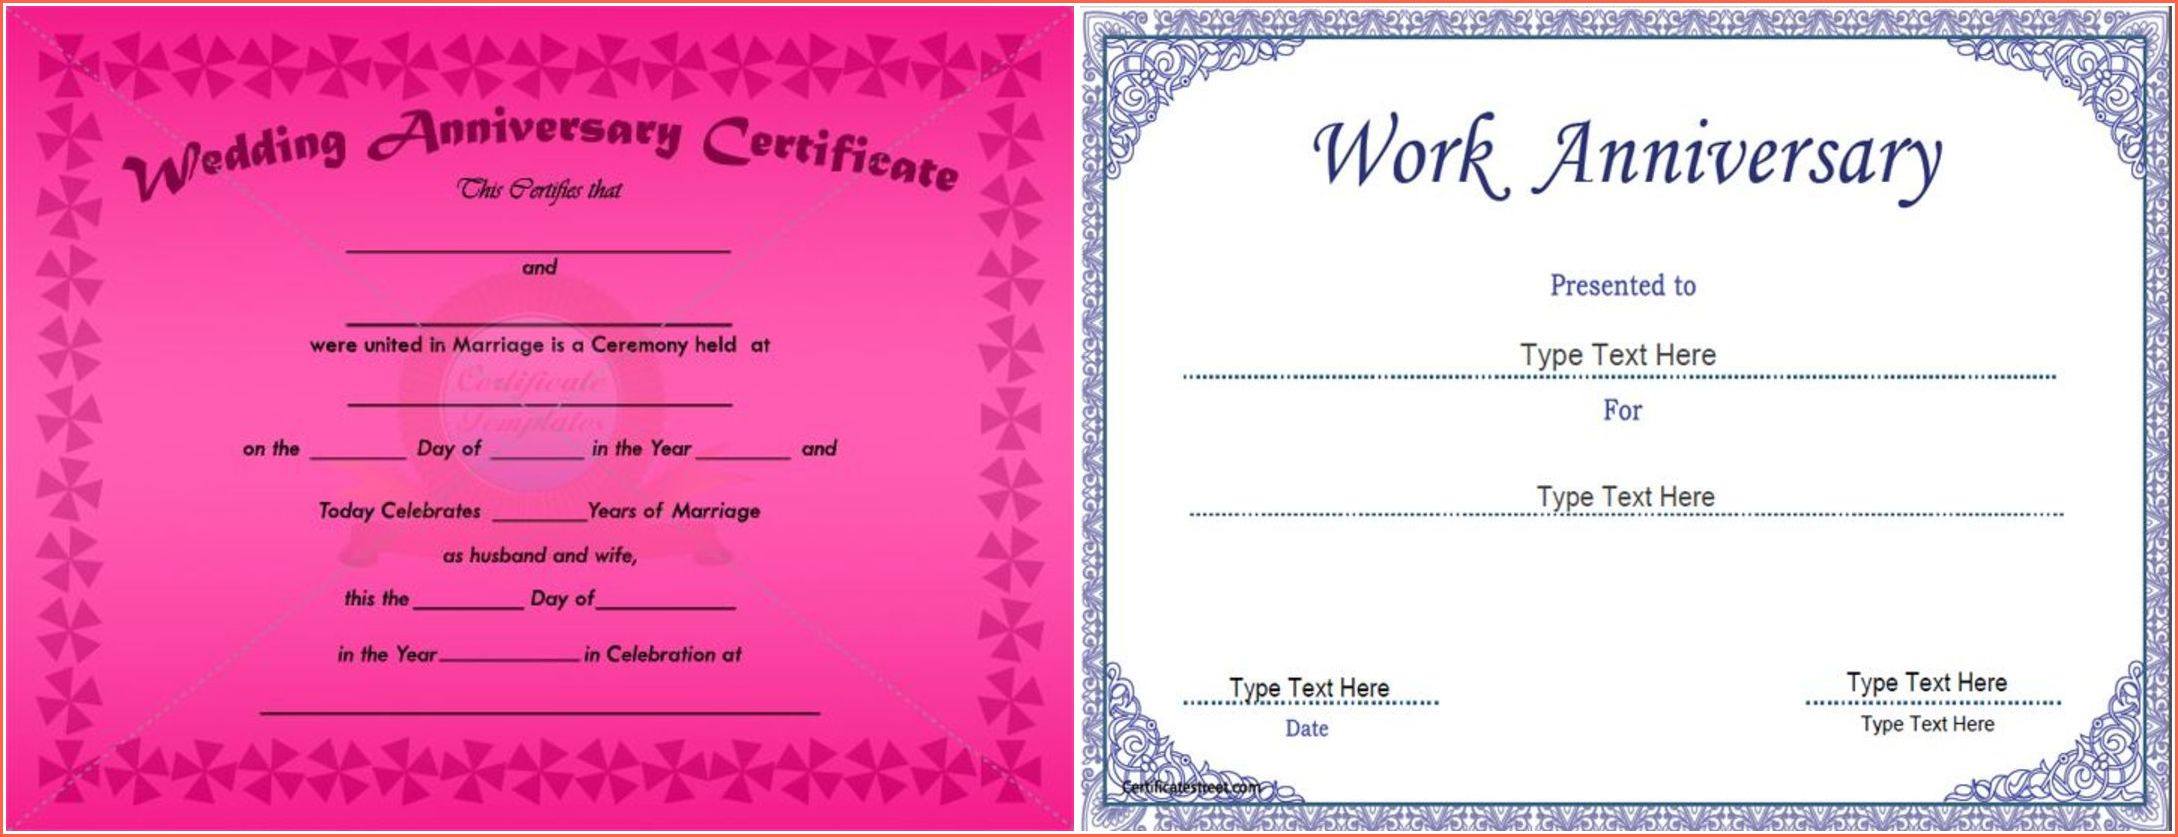 Wedding Anniversary Certificate Template Free With 25Th Gift Regarding Anniversary Certificate Template Free